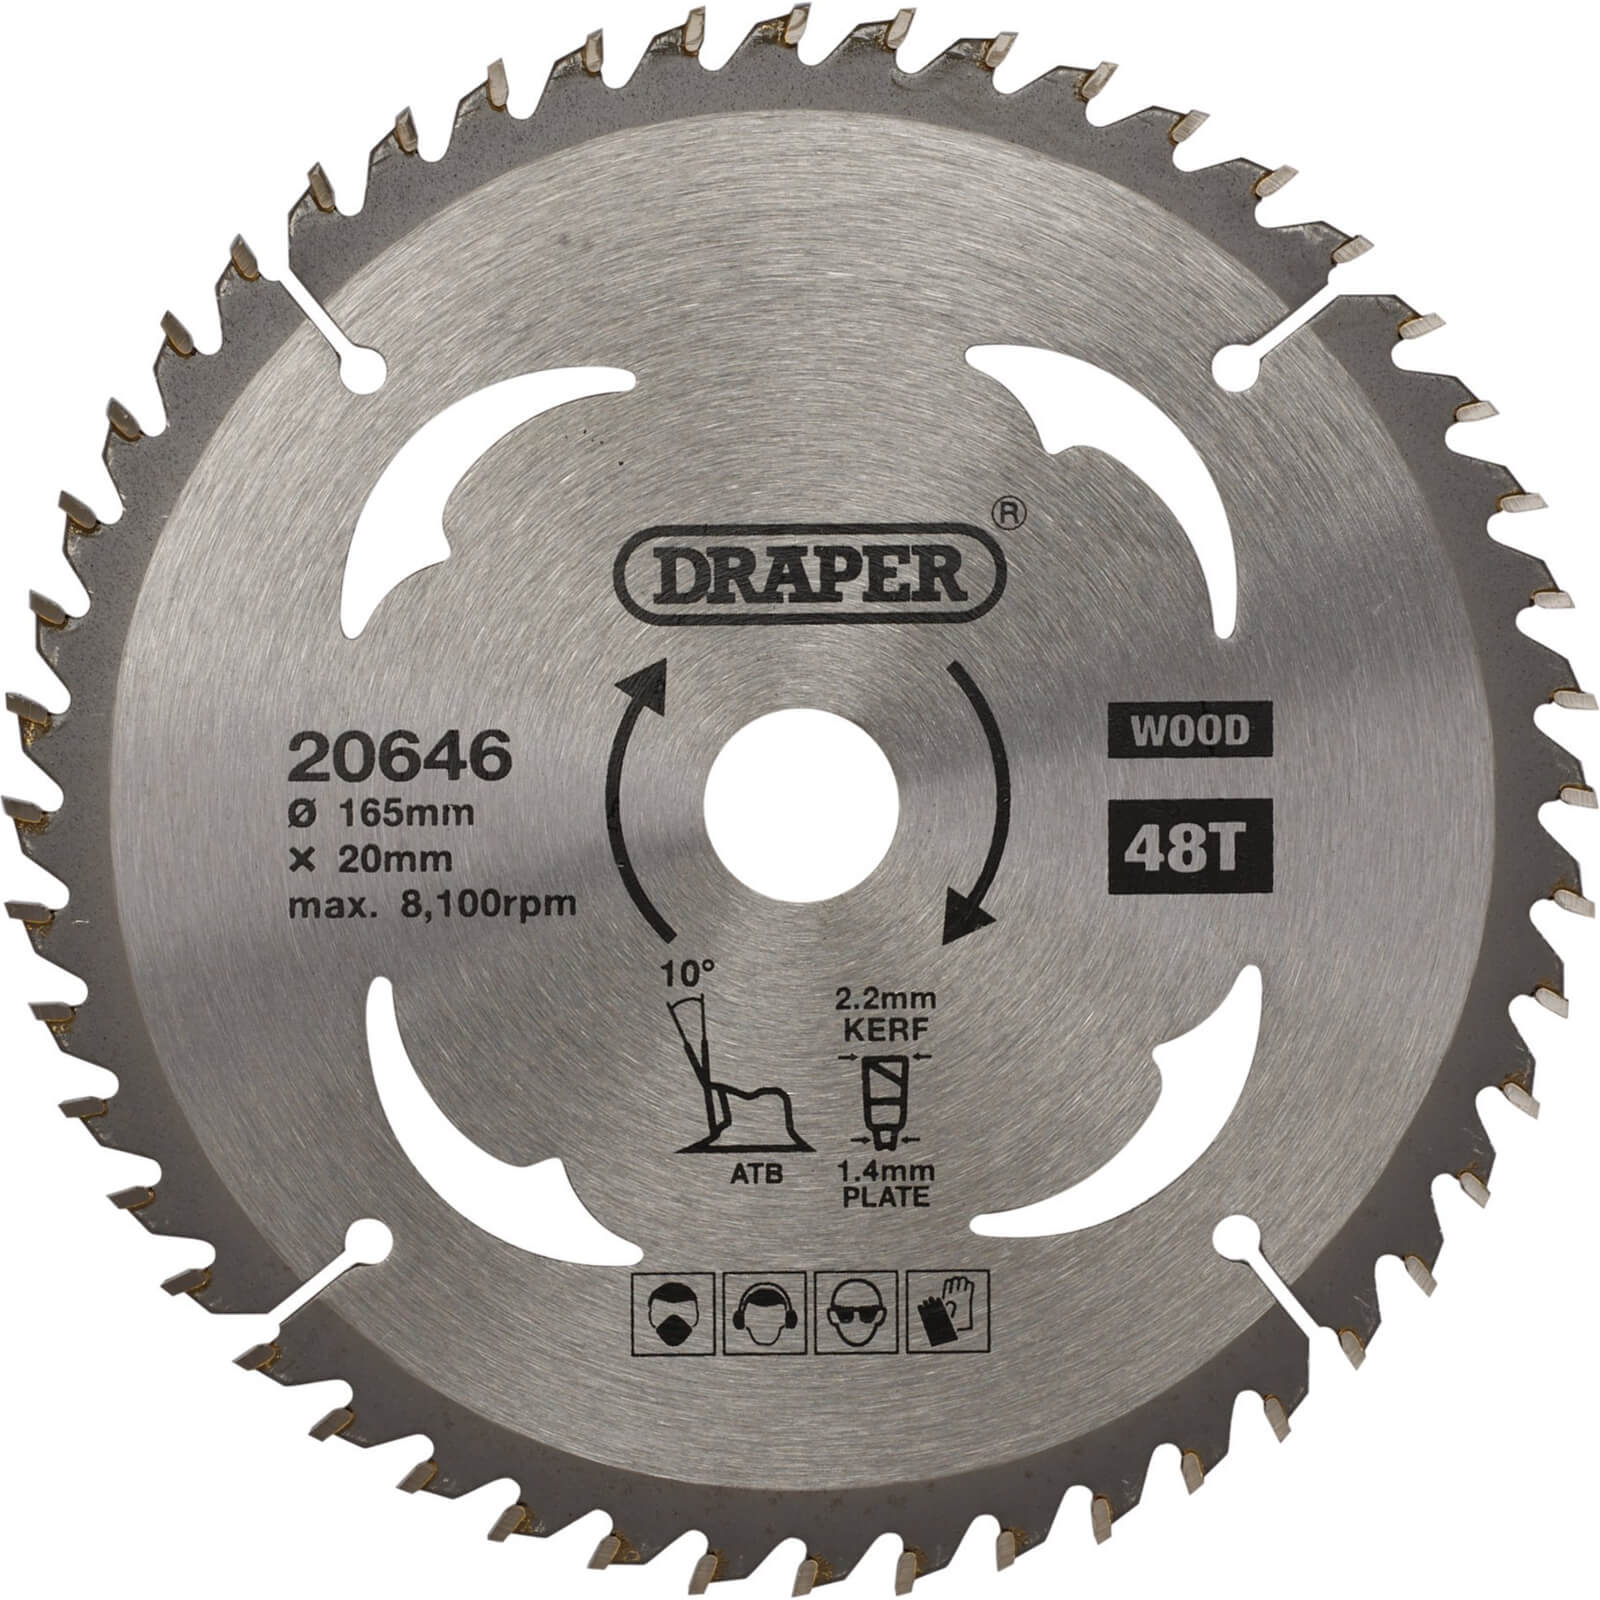 Image of Draper TCT Wood Cutting Circular Saw Blade 165mm 48T 20mm